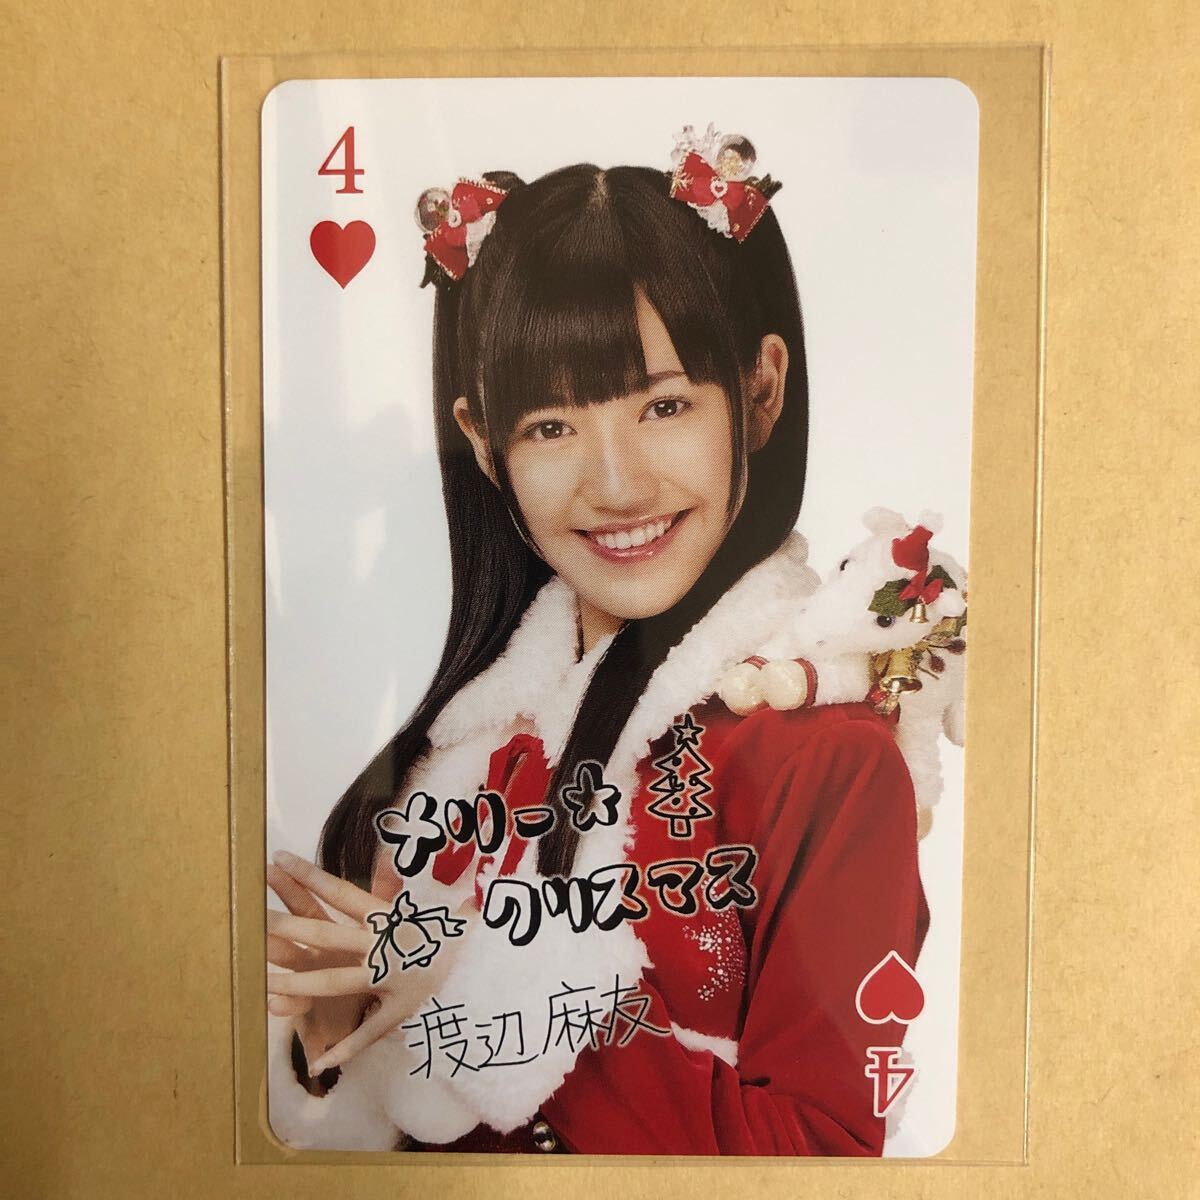 AKB48 Watanabe Mayu коллекционные карточки идол gravure карта карты звезда коллекционная карточка 4 Heart 